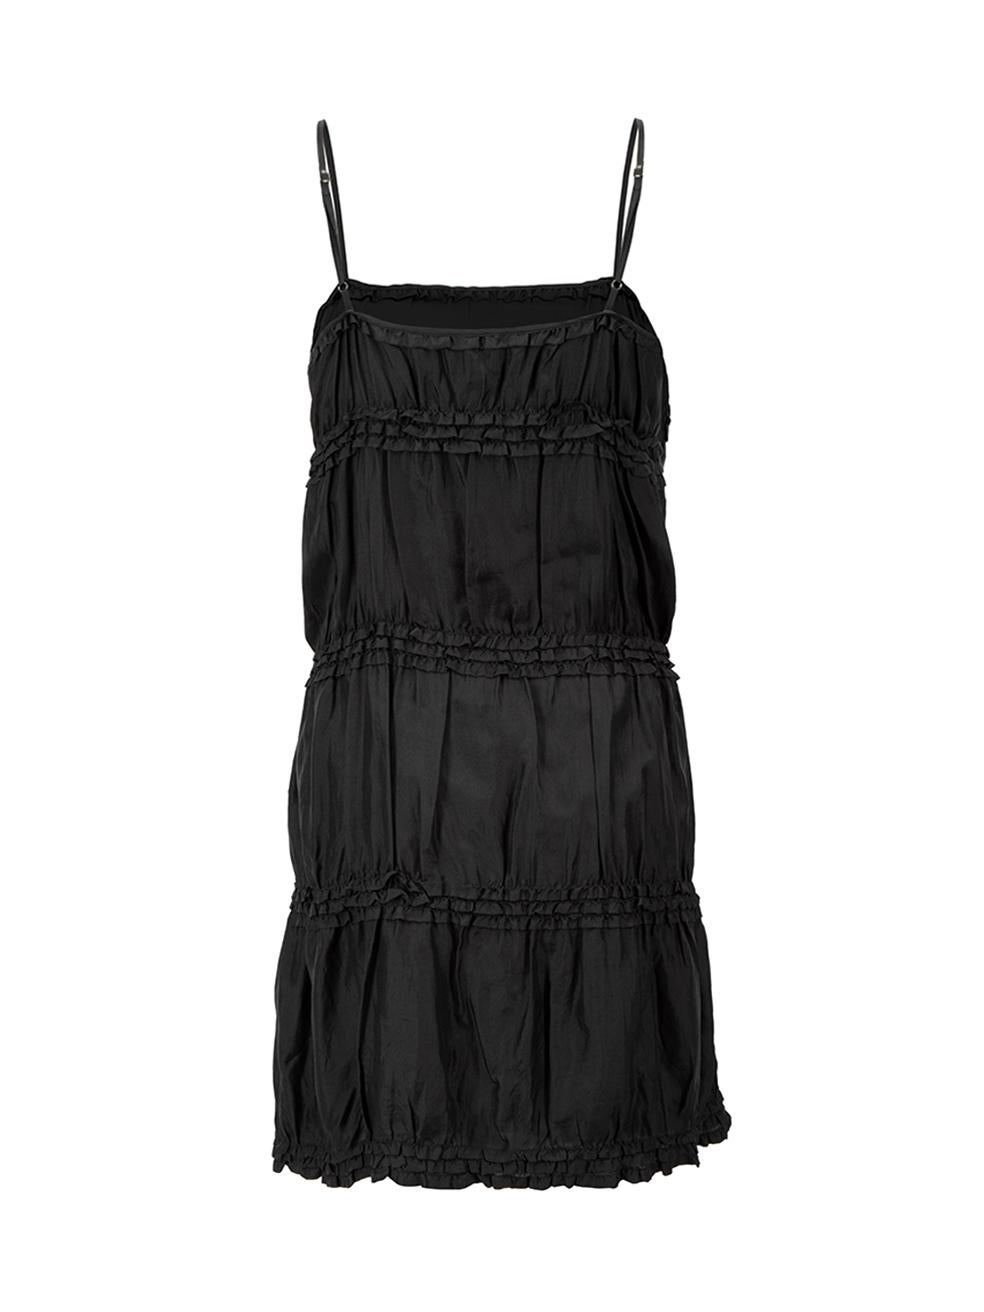 Theory Black Silk Sleeveless Mini Dress Size M In Good Condition In London, GB